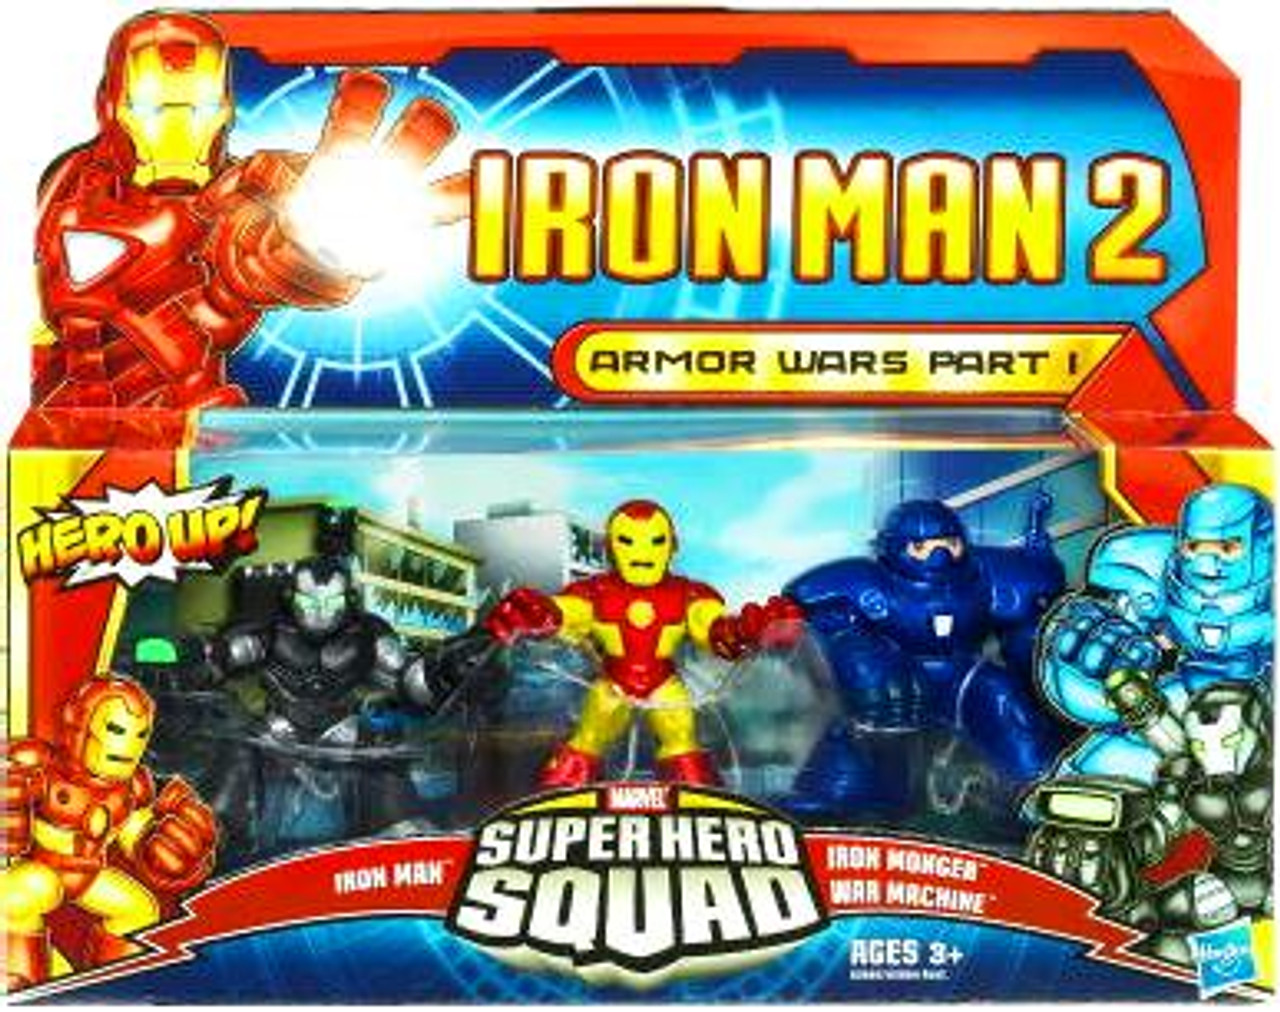 Iron Man 2 Superhero Squad Armor Wars Part I Action Figure 3-Pack 